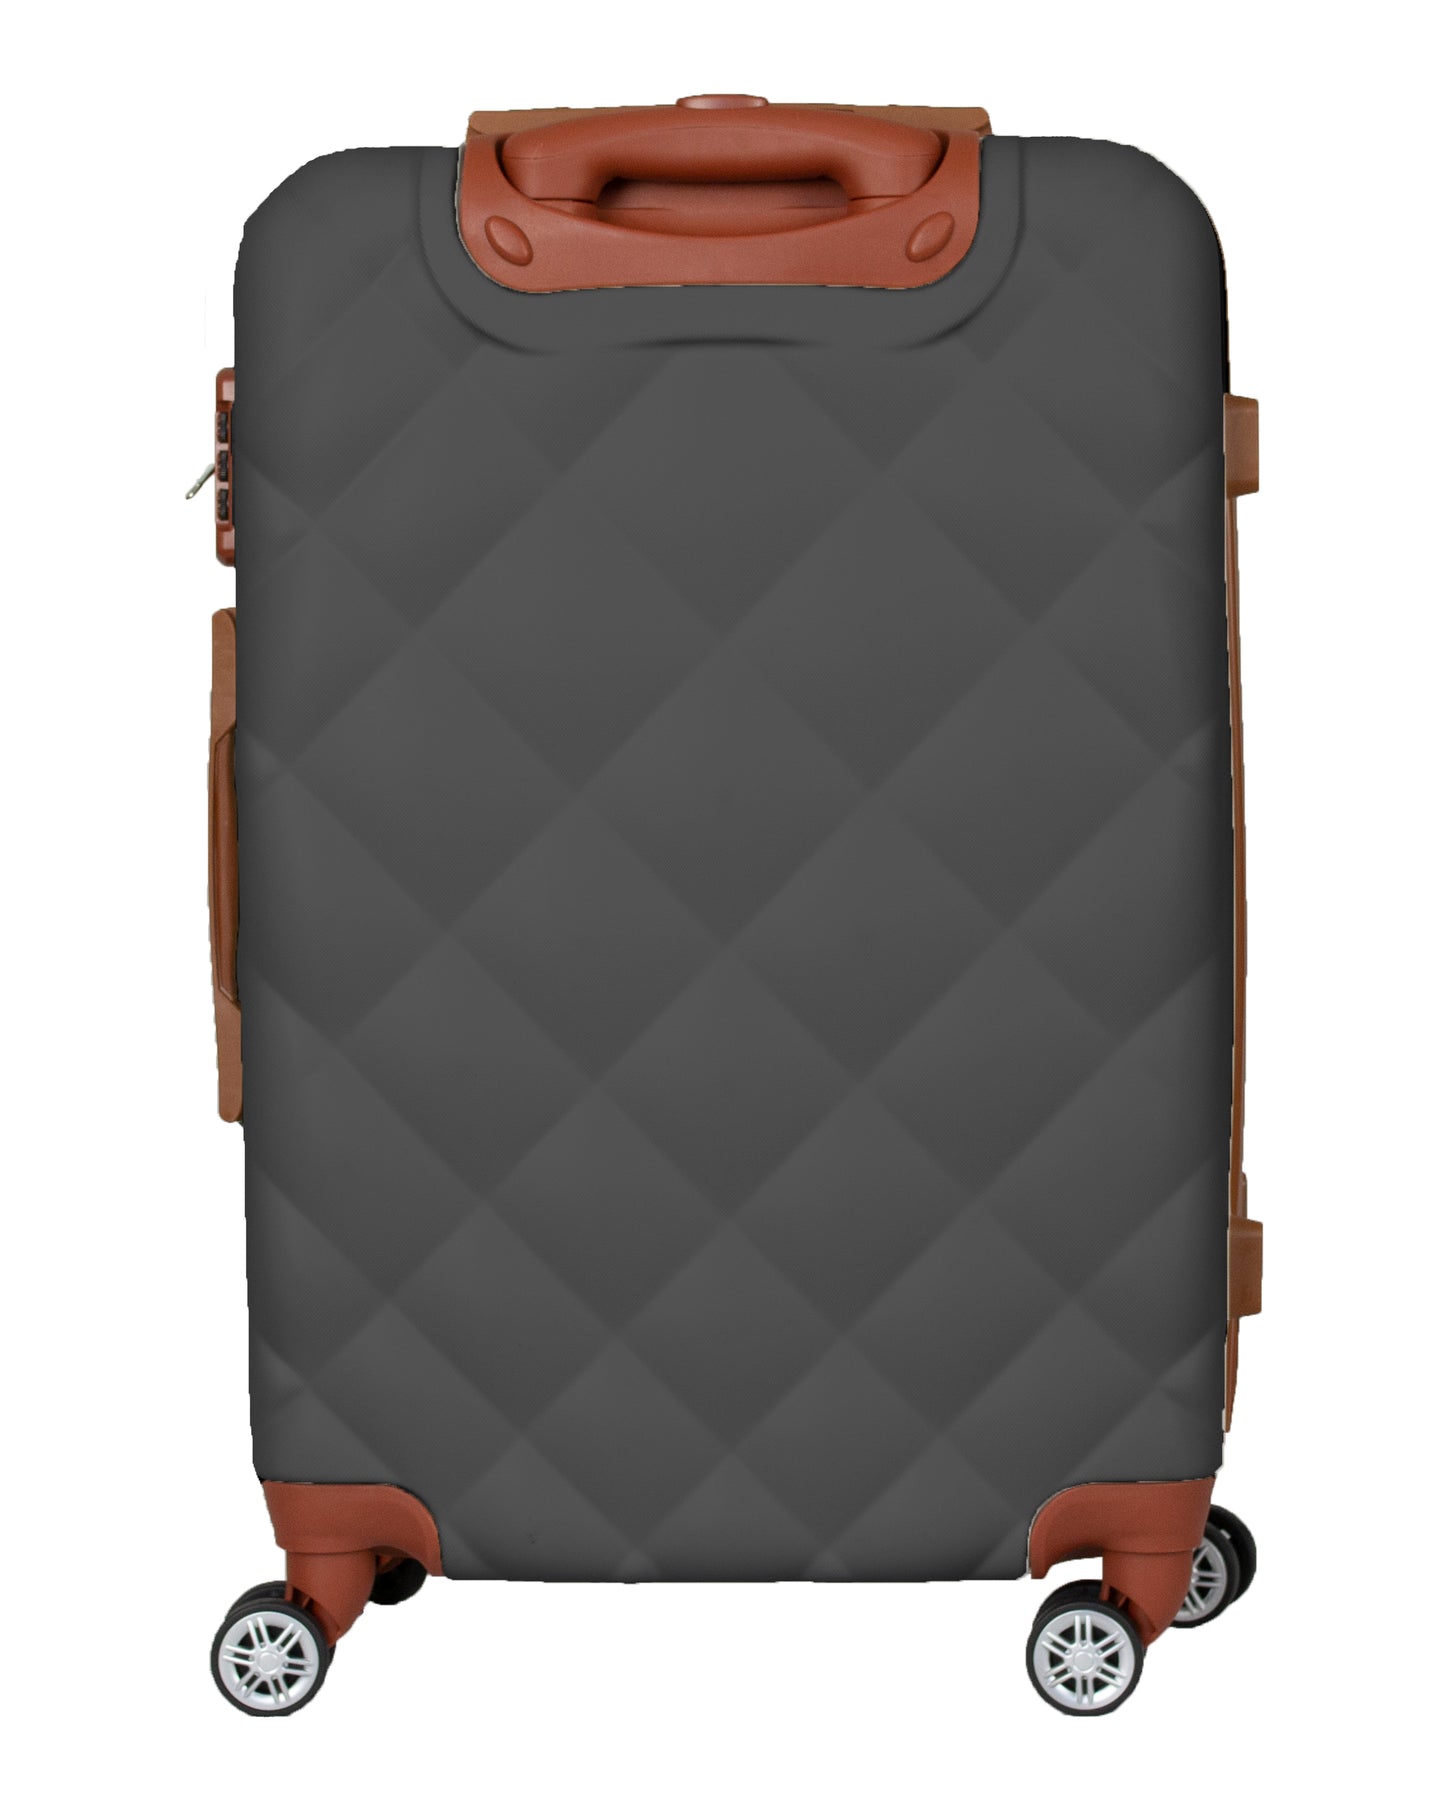 Hard Shell Luggage with 4 Spinner Wheels, Dark Grey